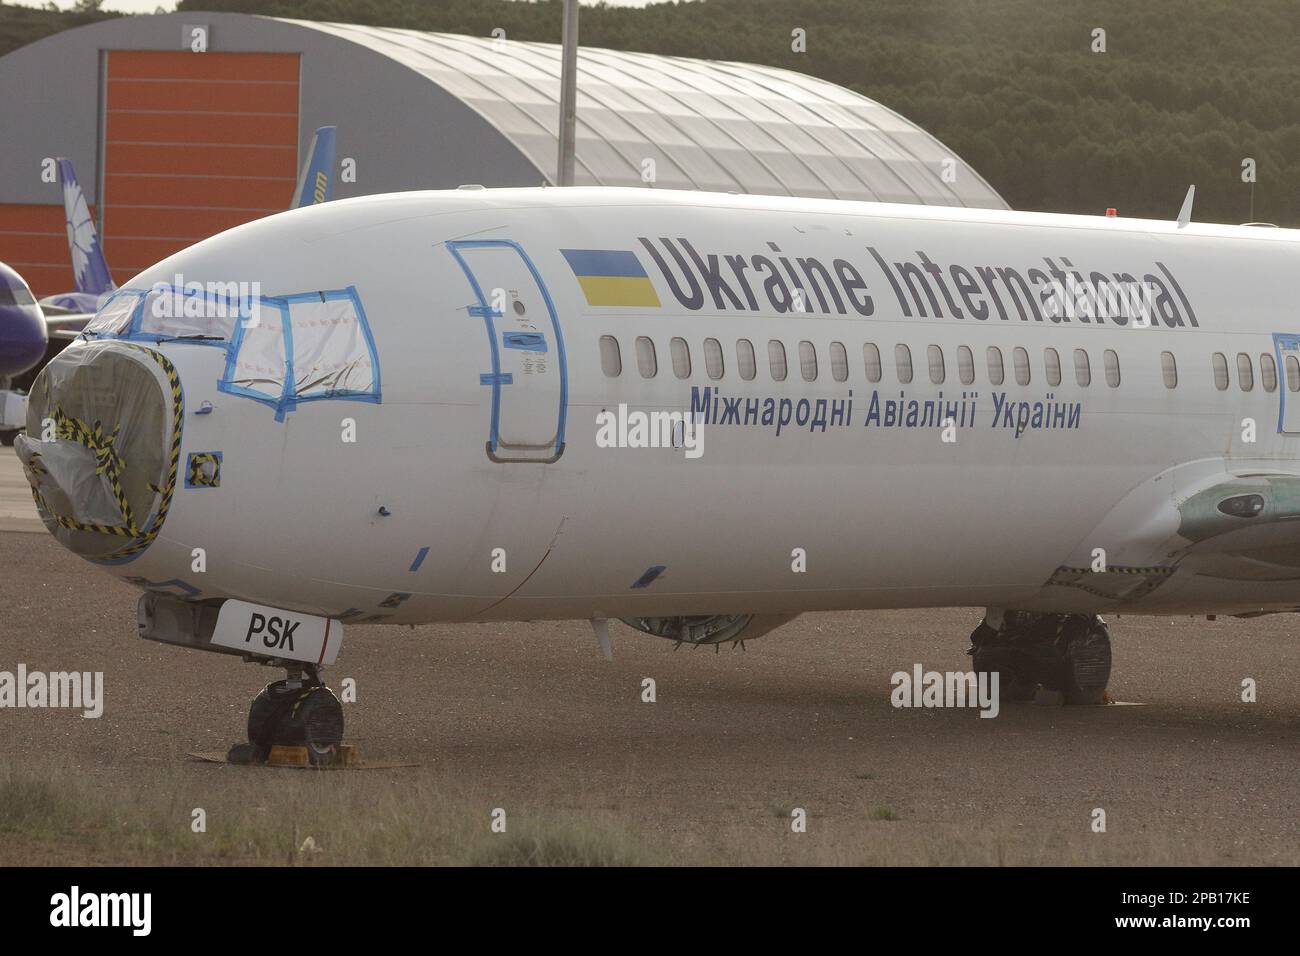 Castellon de la Plana, Spain - November 11, 2022: Ukraine International Airlines (Miznarodni Avialiniji Ukrajiny) airplane fuselage on a planes cemete Stock Photo